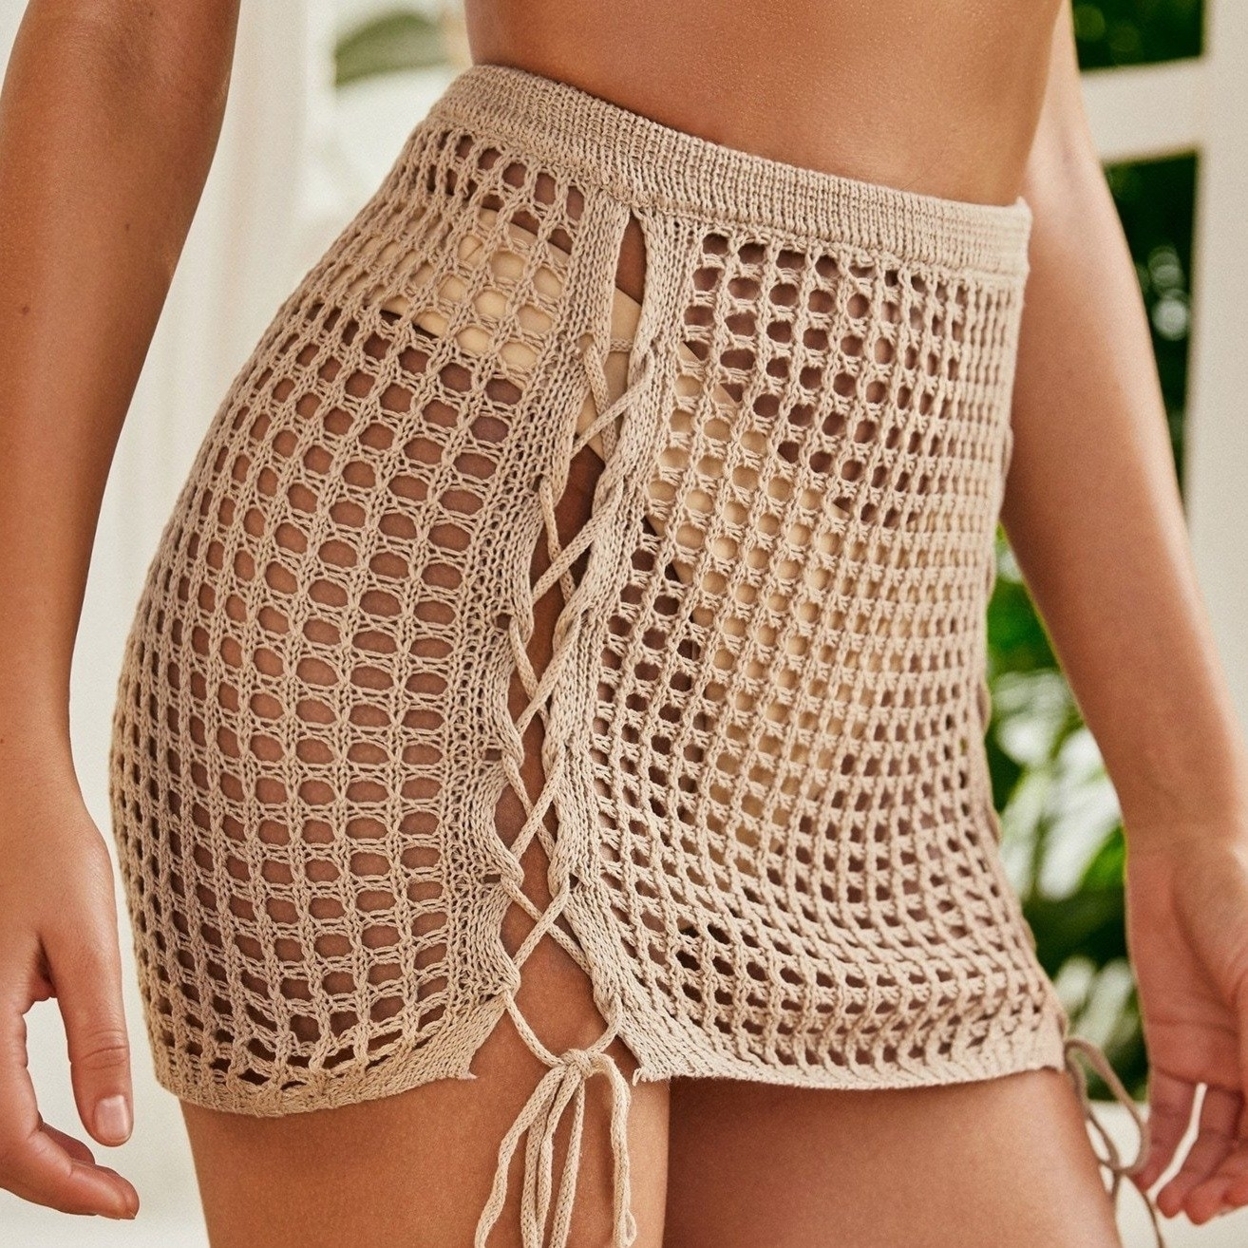 Crochet Hollow-out Cover Up Skirt - Camel, Xl